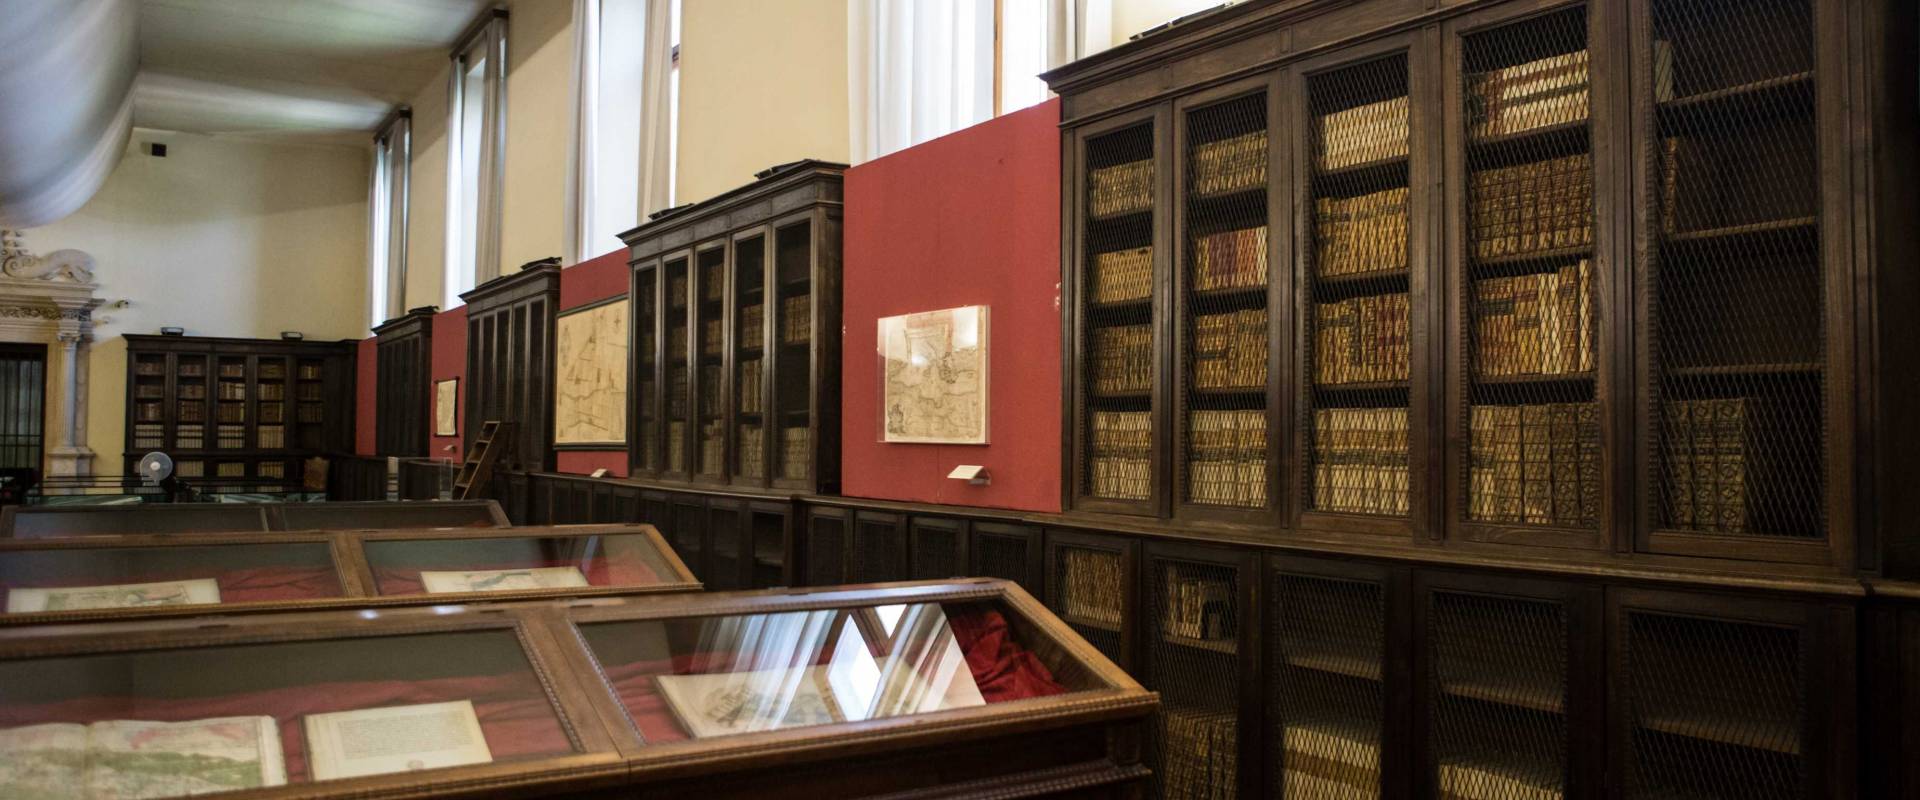 Sala Biblioteca Malatestiana foto di Boschetti marco 65